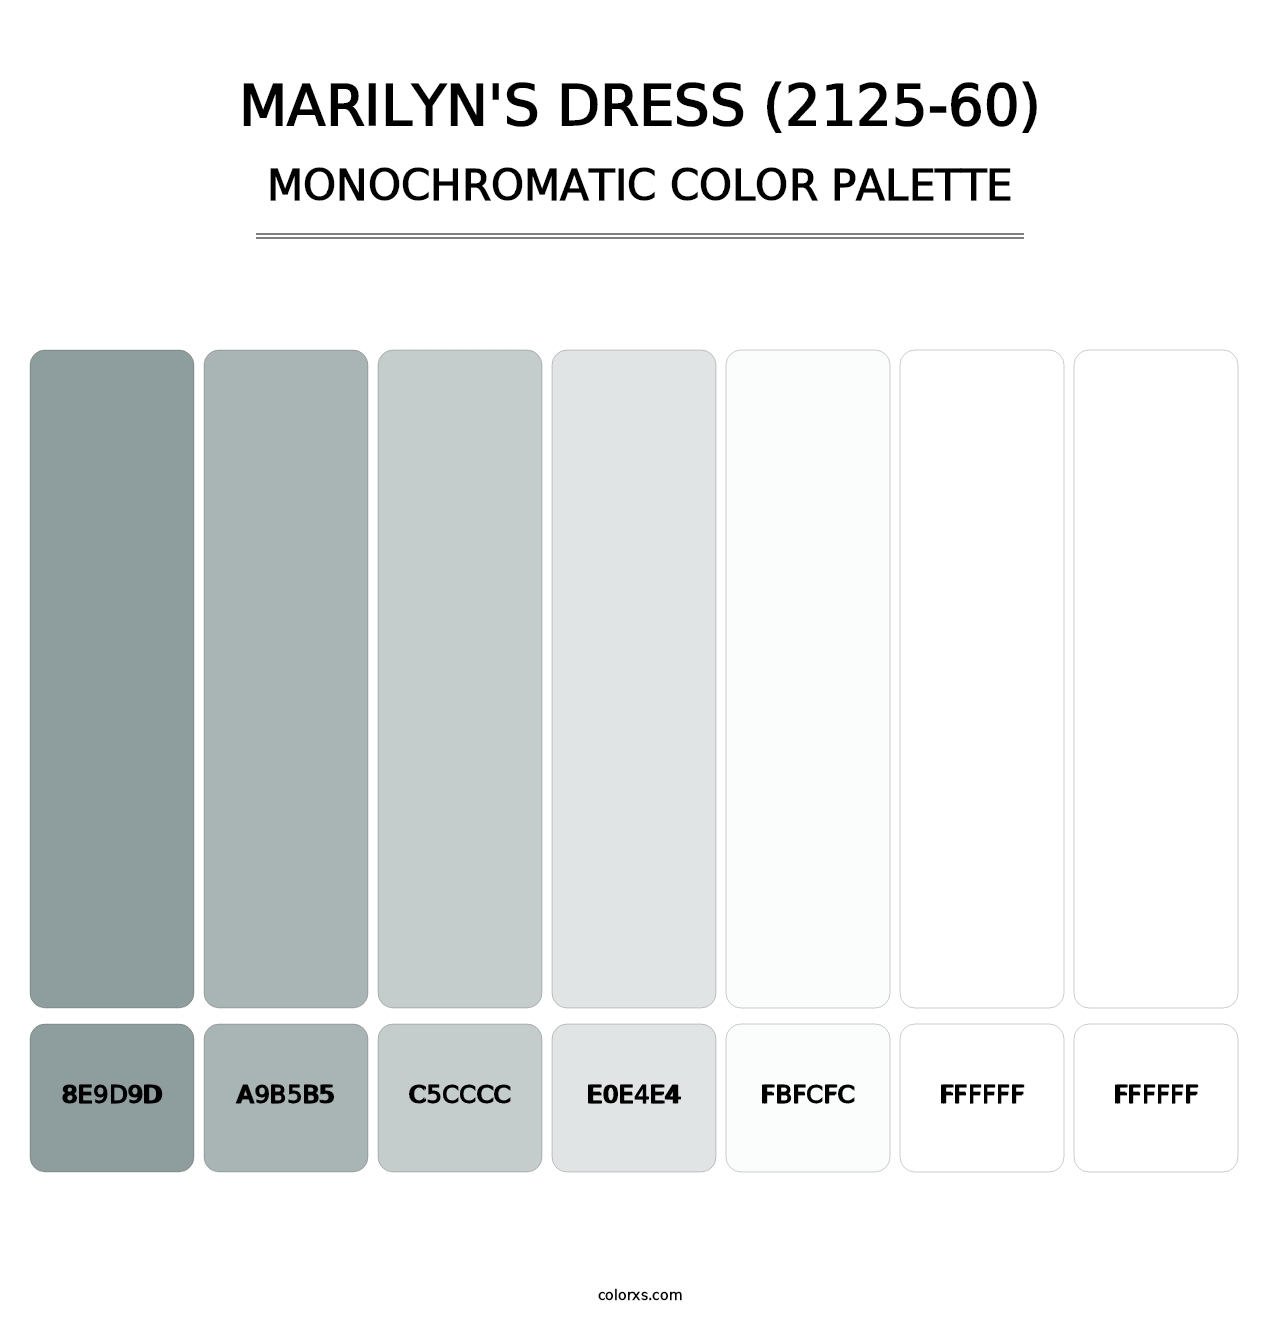 Marilyn's Dress (2125-60) - Monochromatic Color Palette